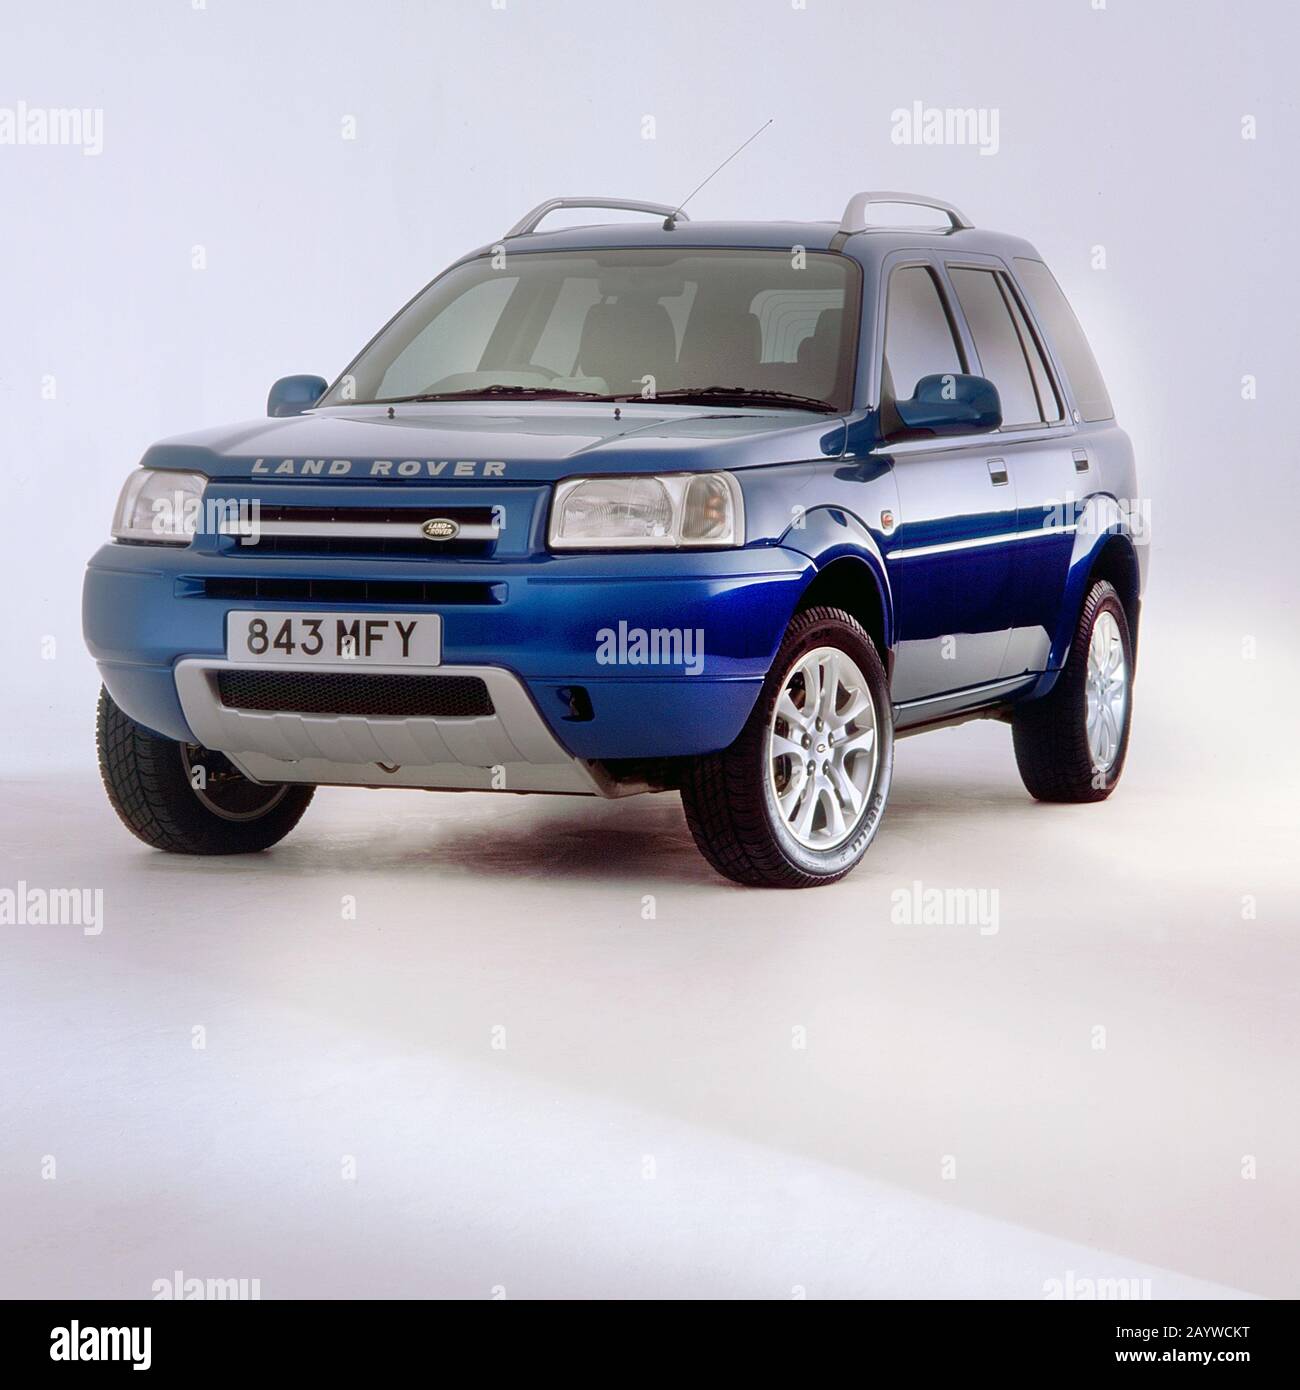 2001 Land Rover Freelander Autobiography Stock Photo